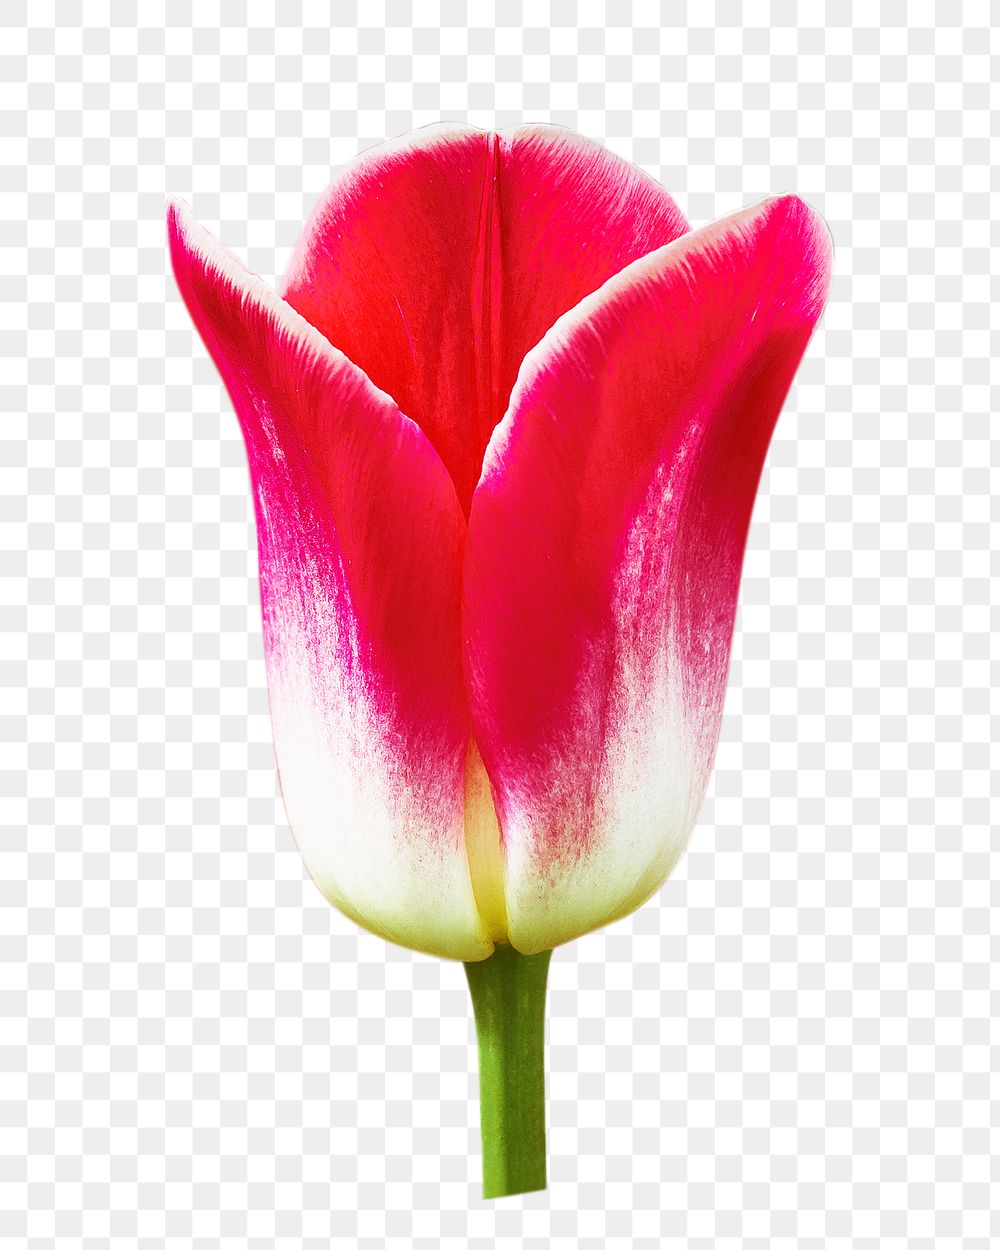 Red spring tulip png, transparent background